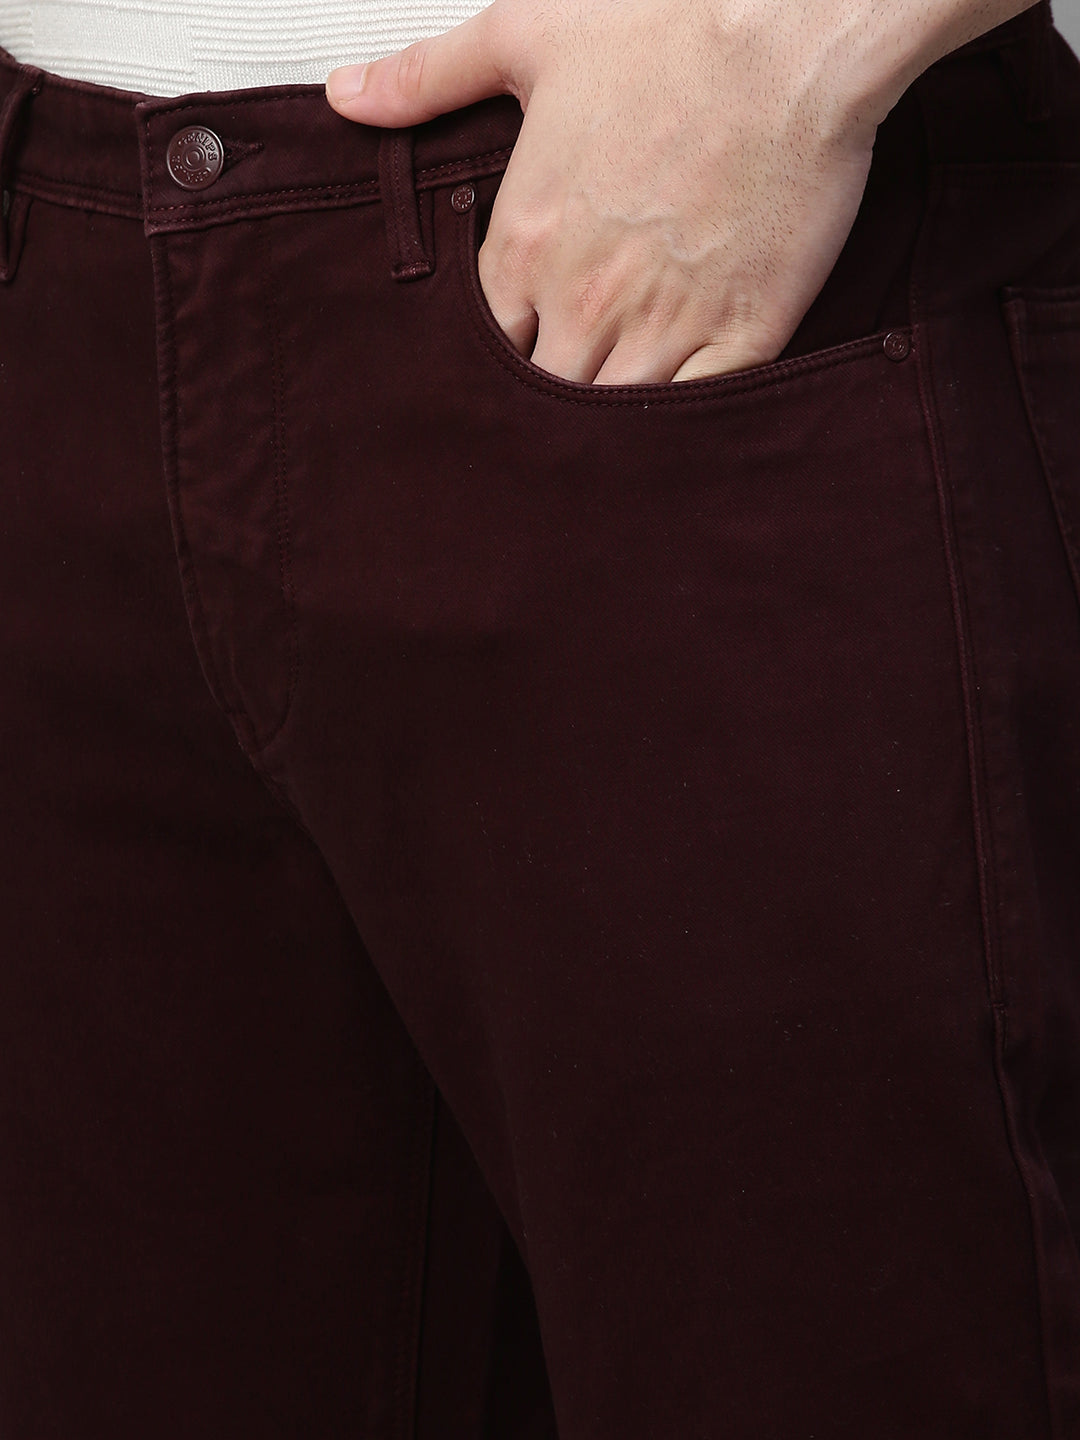 Genips Men's Wine Color Cotton Stretch Rico Slim Fit Solid 5 Pocket Trouser